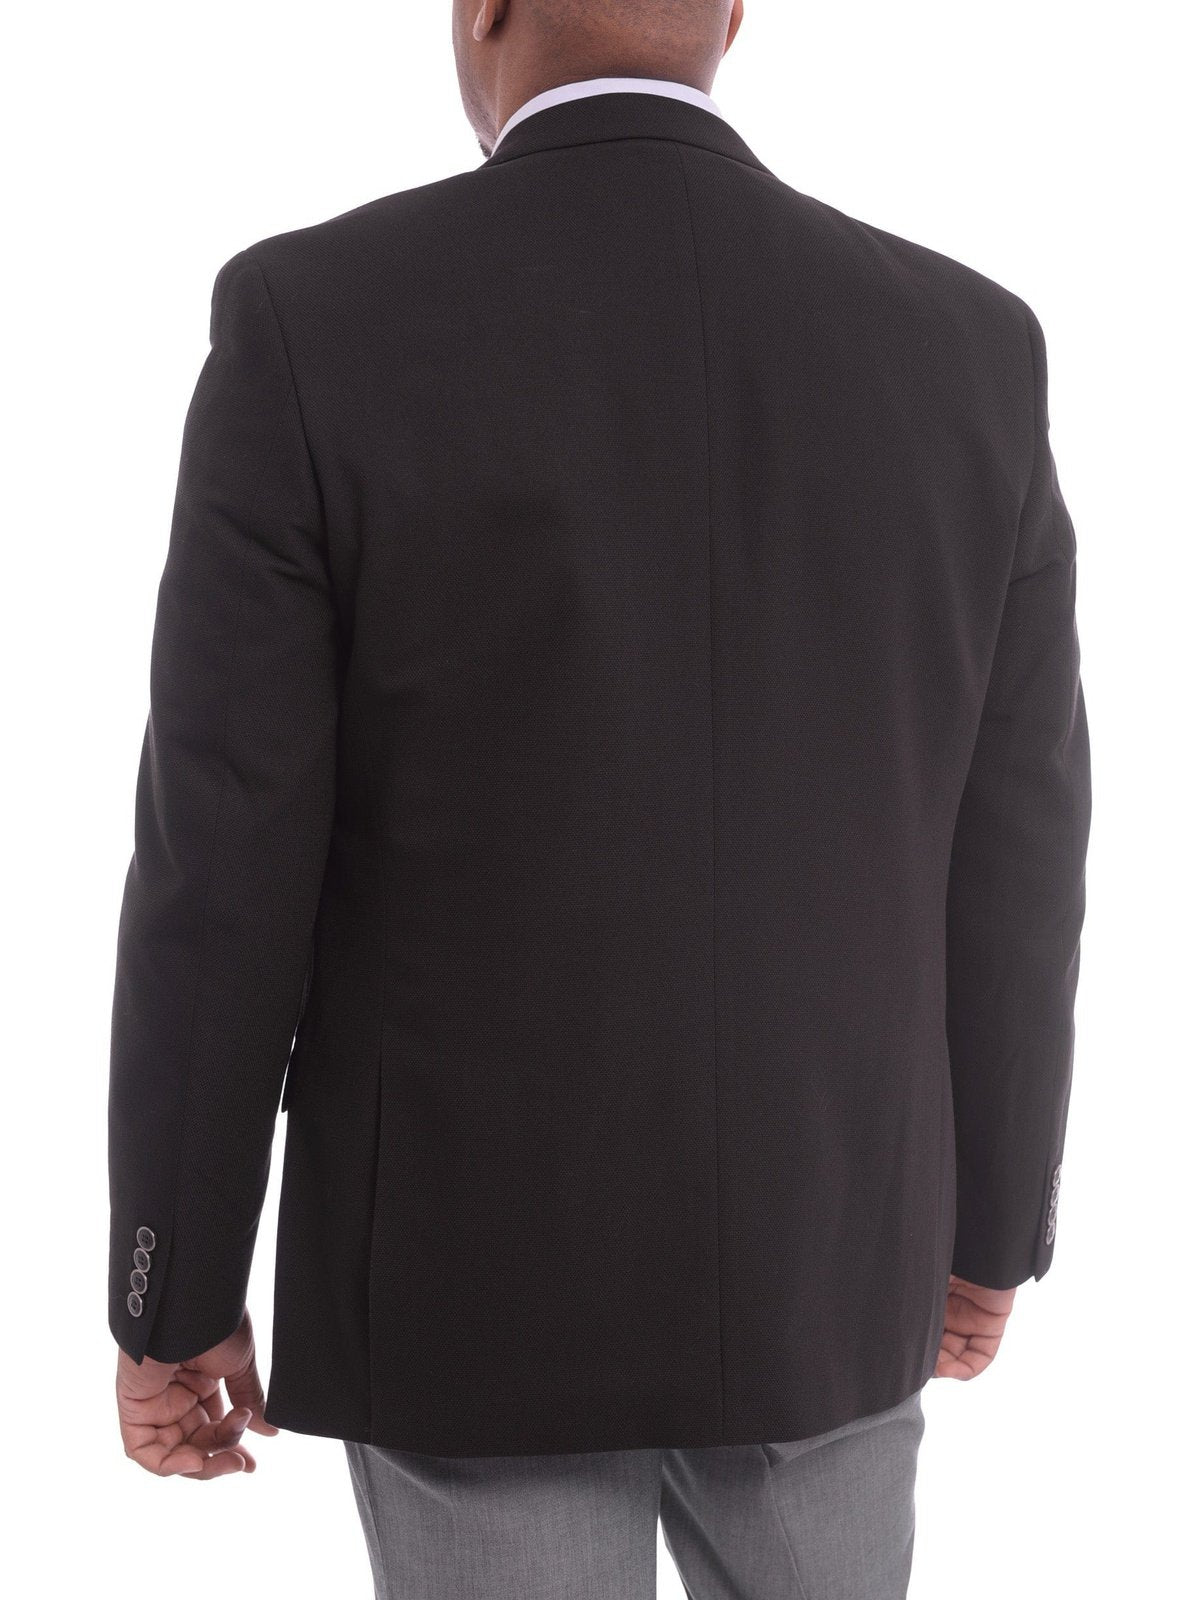 Caravelli BLAZERS Caravelli Classic Fit Solid Black Hopsack Weave Stretch Blazer Sportcoat